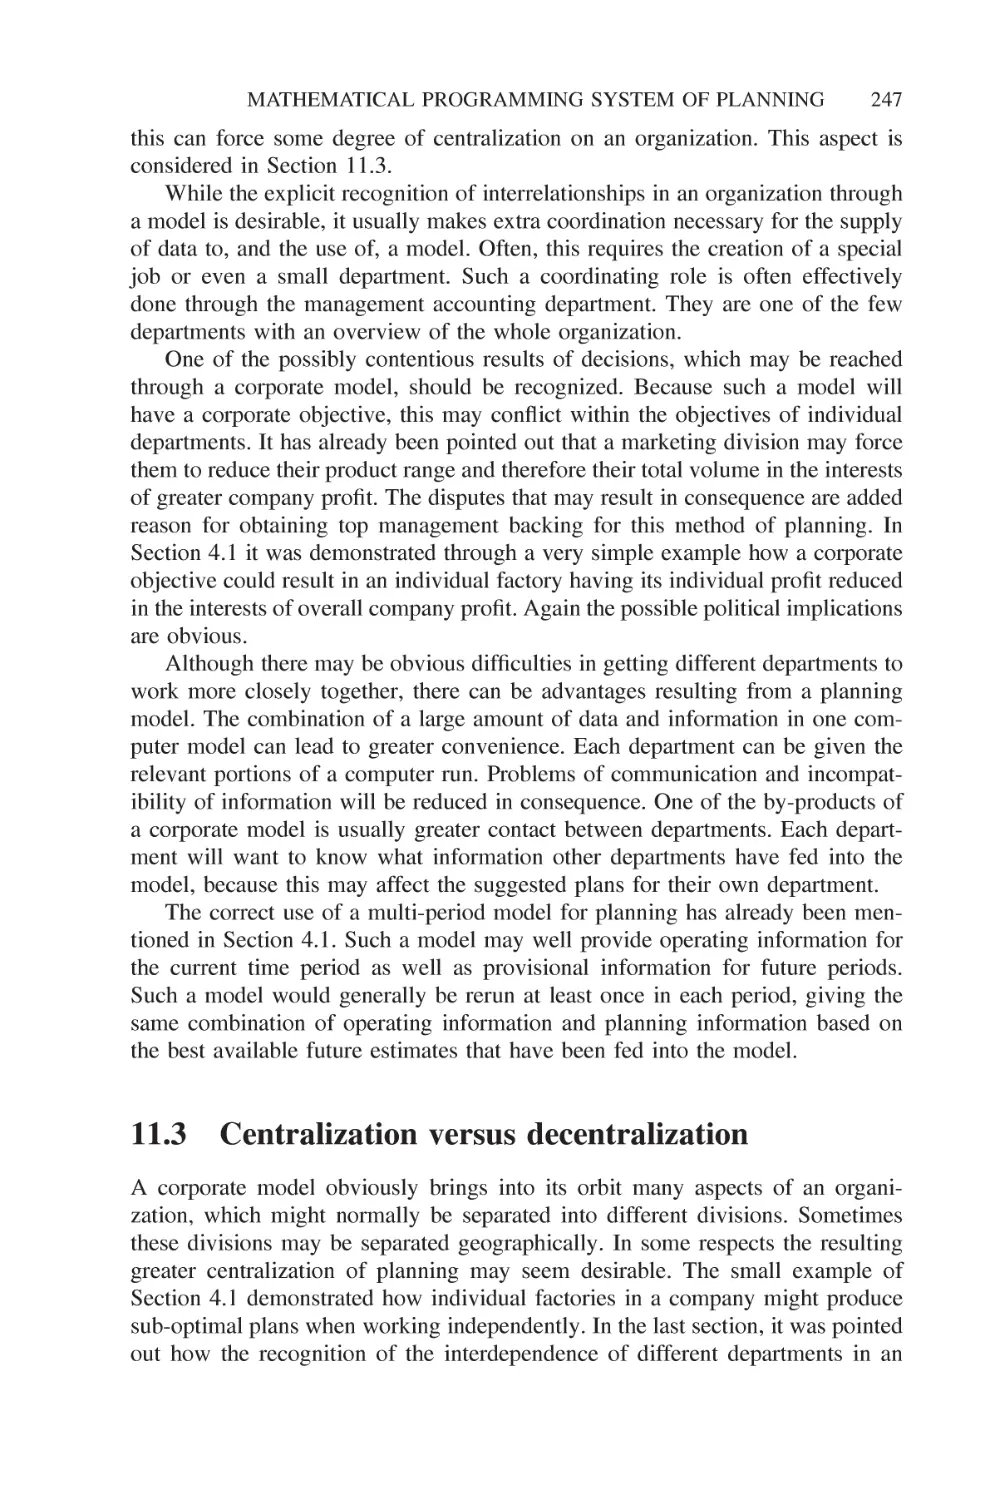 11.3 Centralization versus decentralization